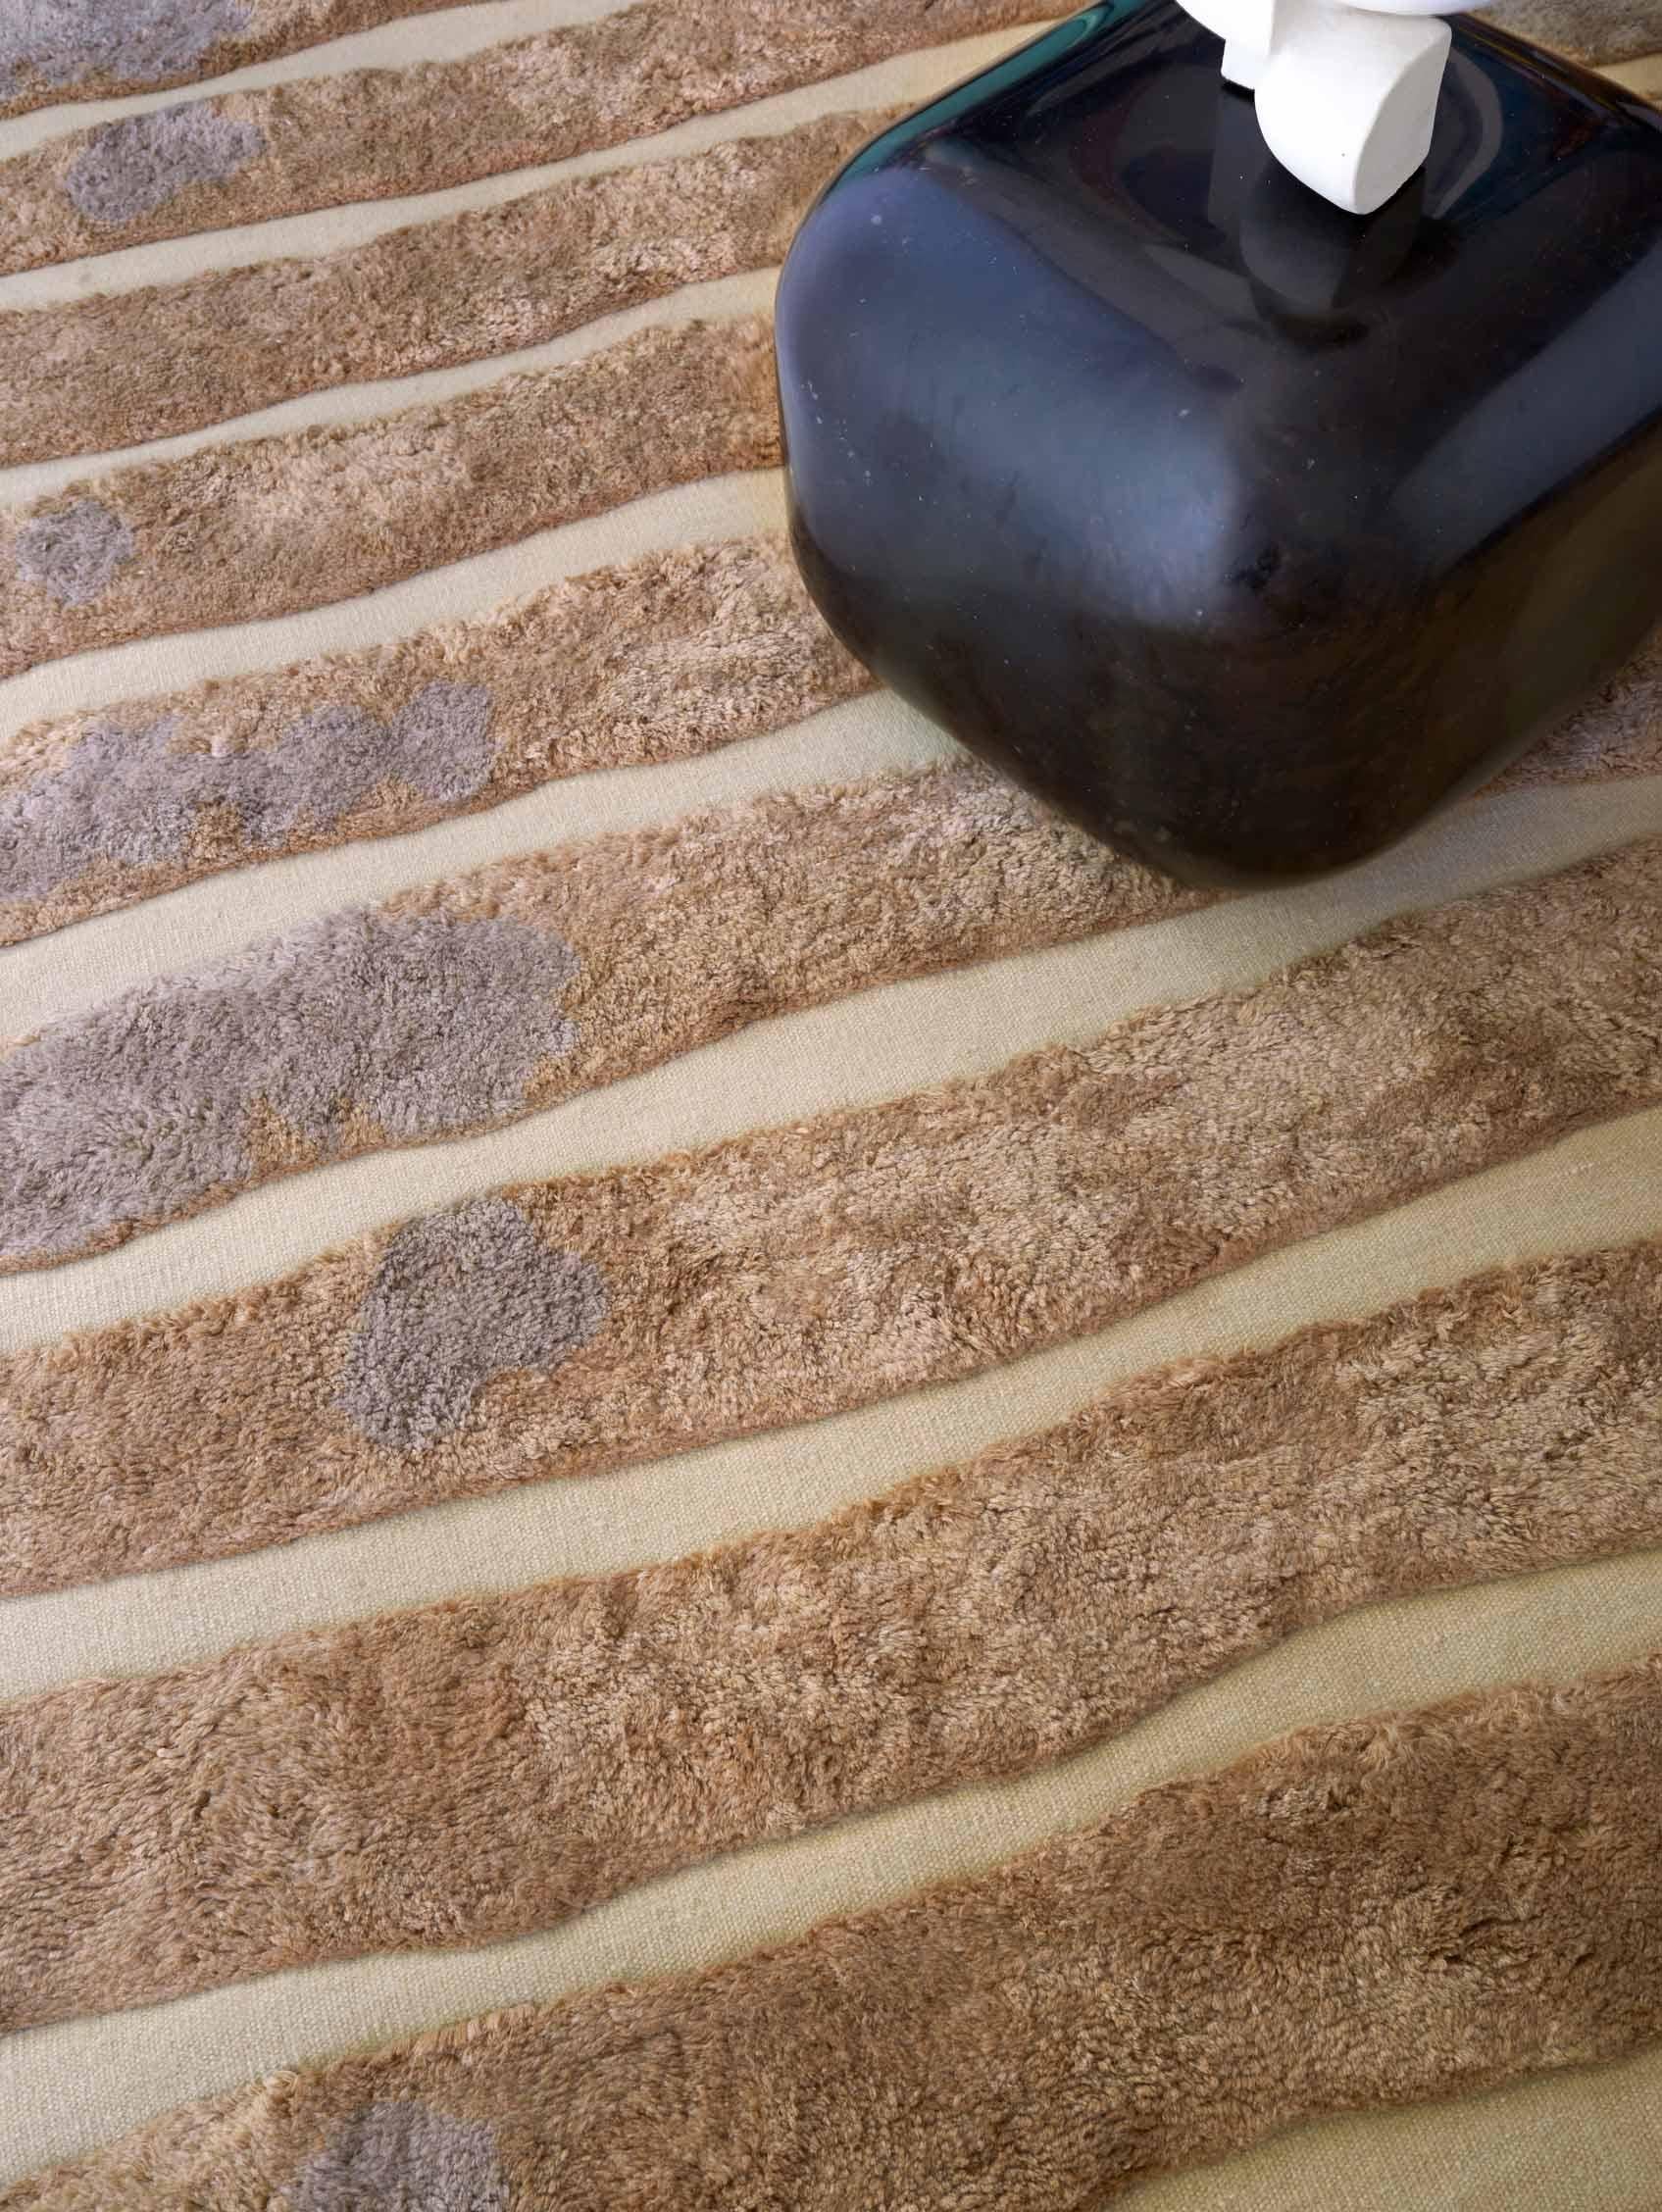 Muster des Teppichs: Bold Stripe - Siena
MATERIAL: Merino Wool Pile/ New Zealand Wool Flat-weave
Qualität: Wolle Flachgewebe & marokkanischer Flor, 10mm Flor, handgewebt 
Größe: 6'-0